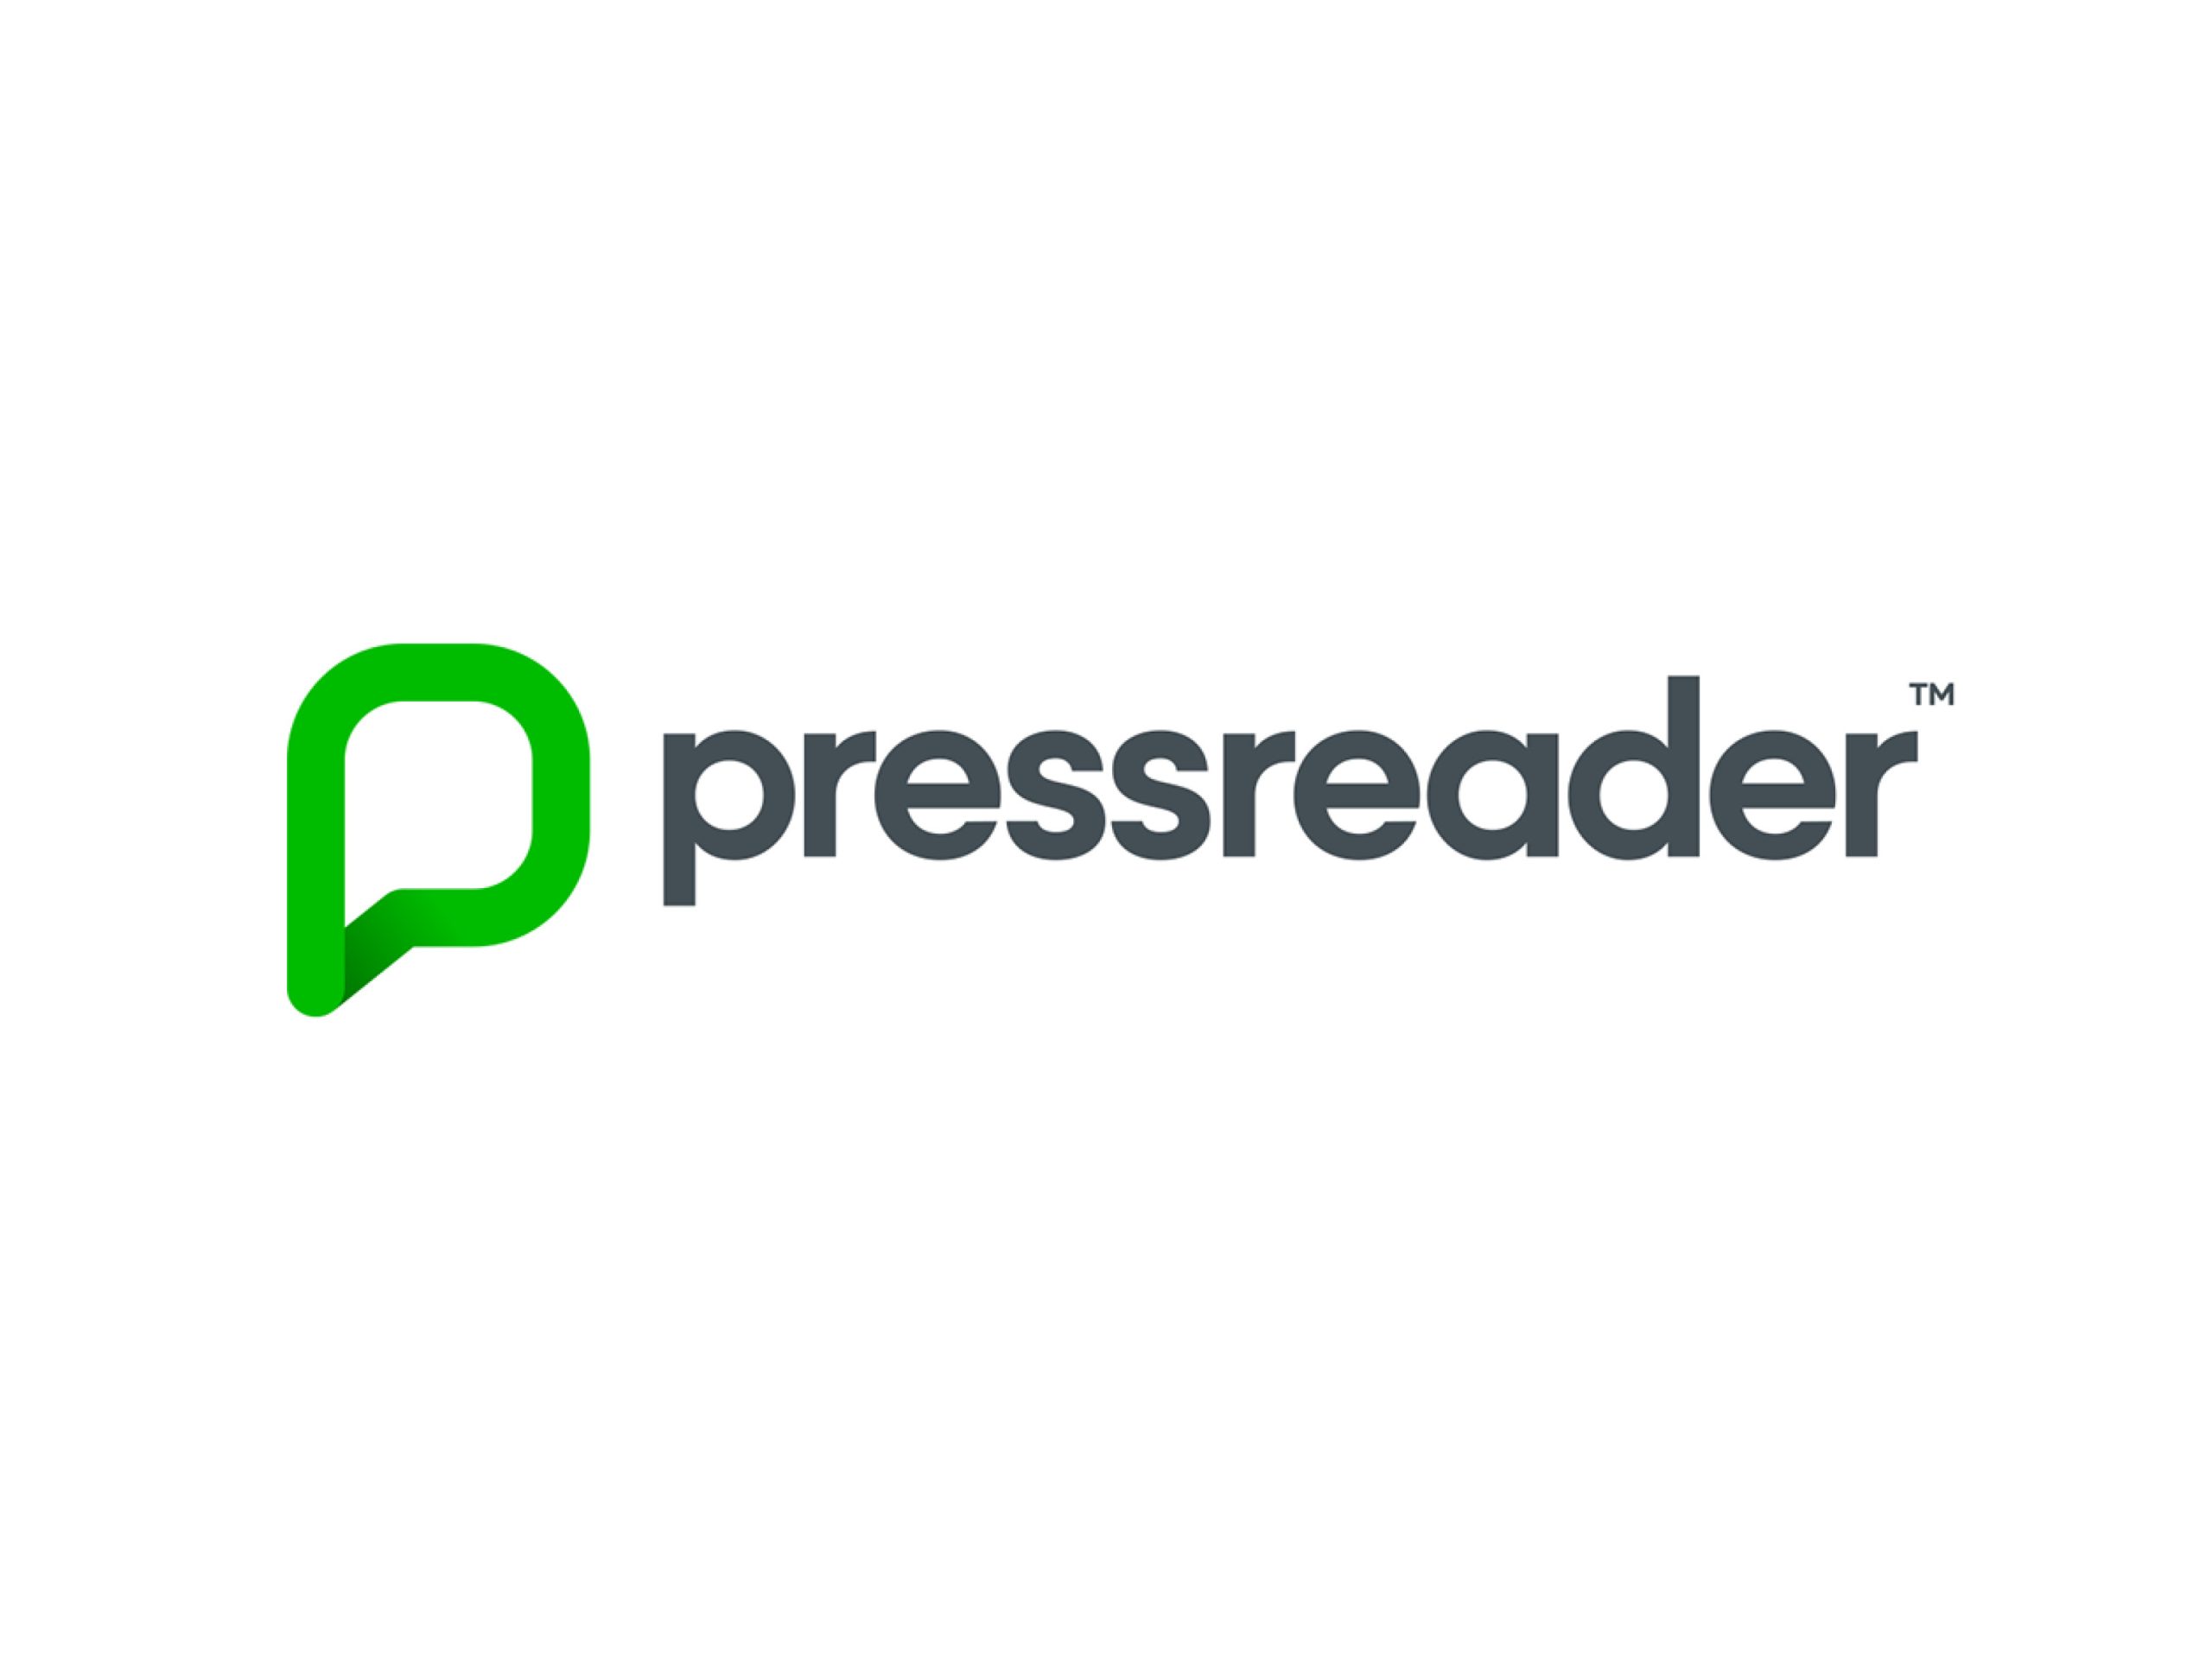 Pressreader logo<br />
